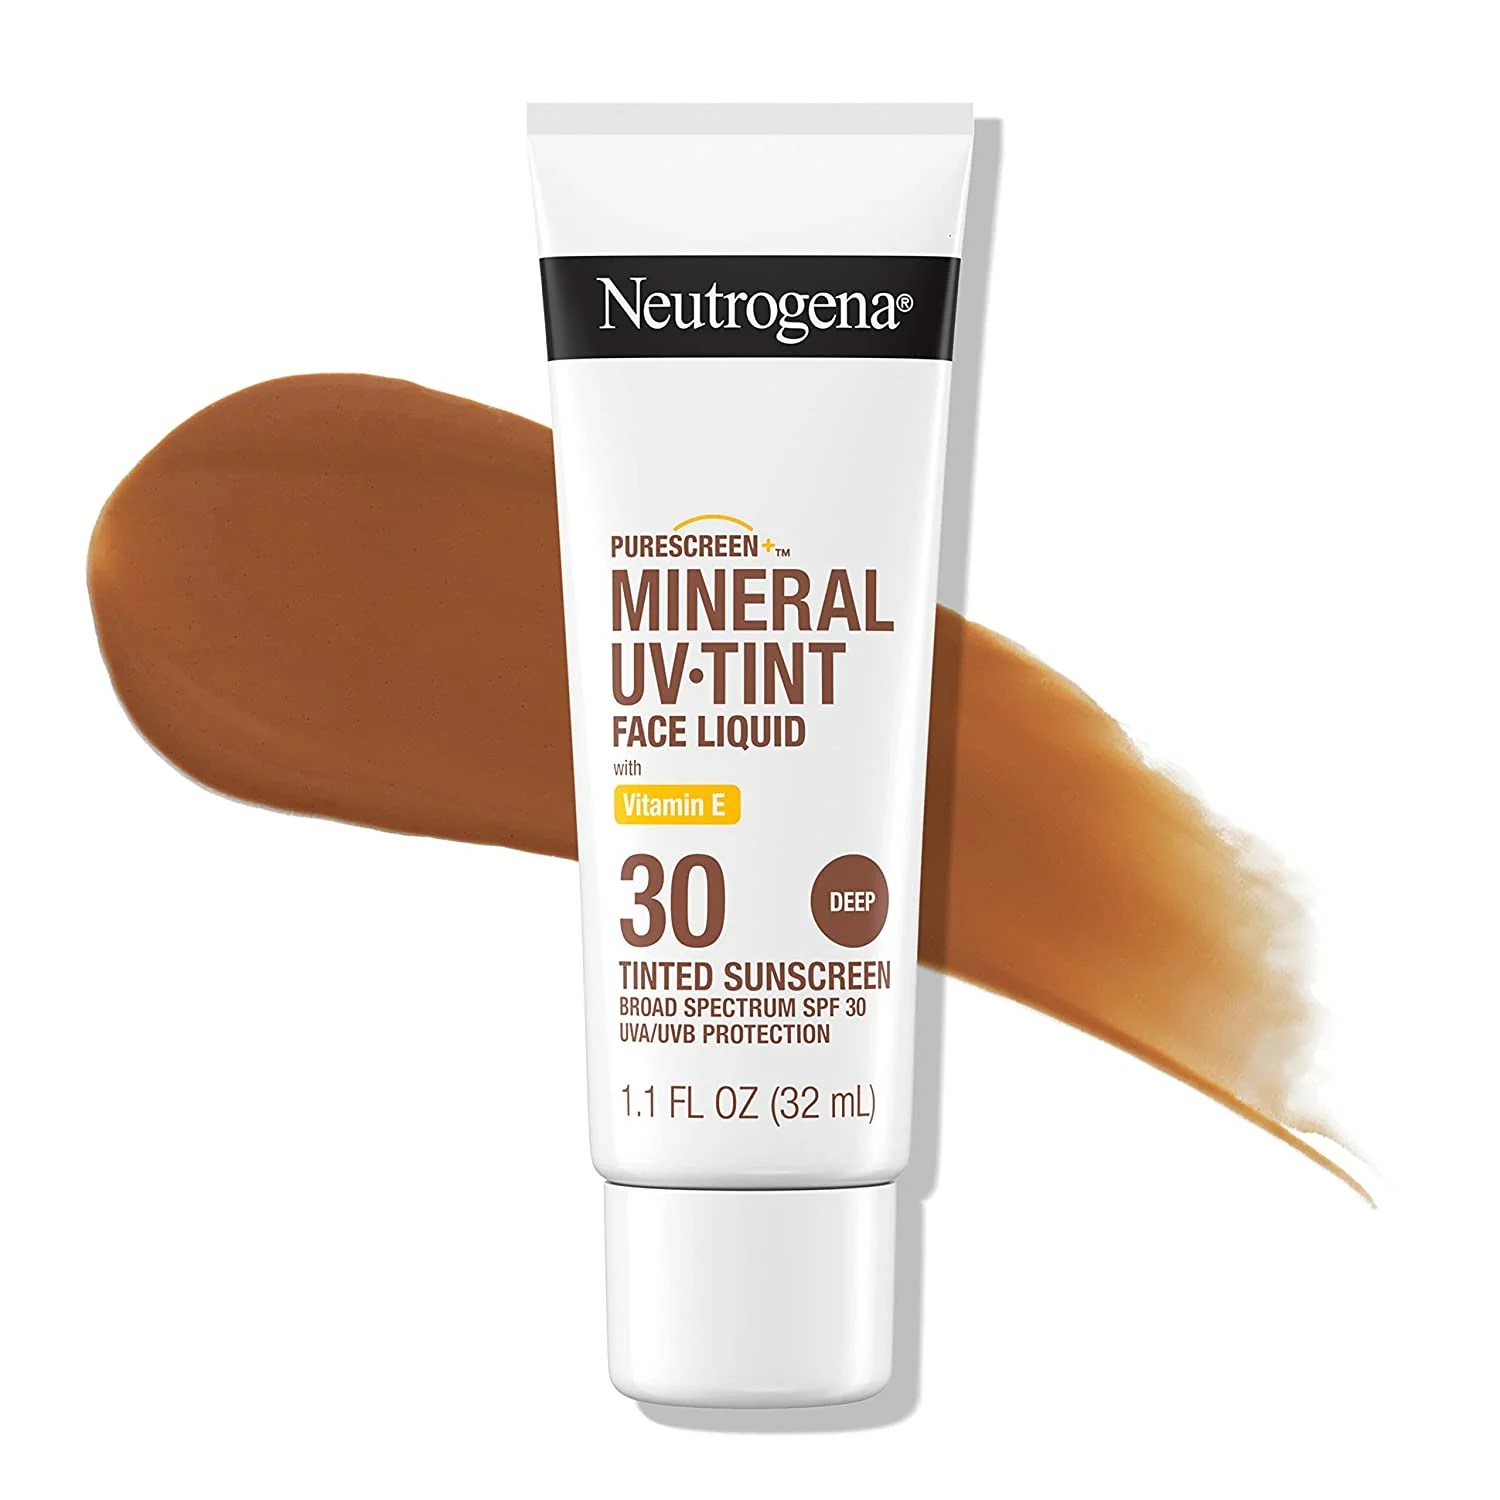 Neutrogena Purescreen+ Mineral UV Tint Face Liquid Sunscreen